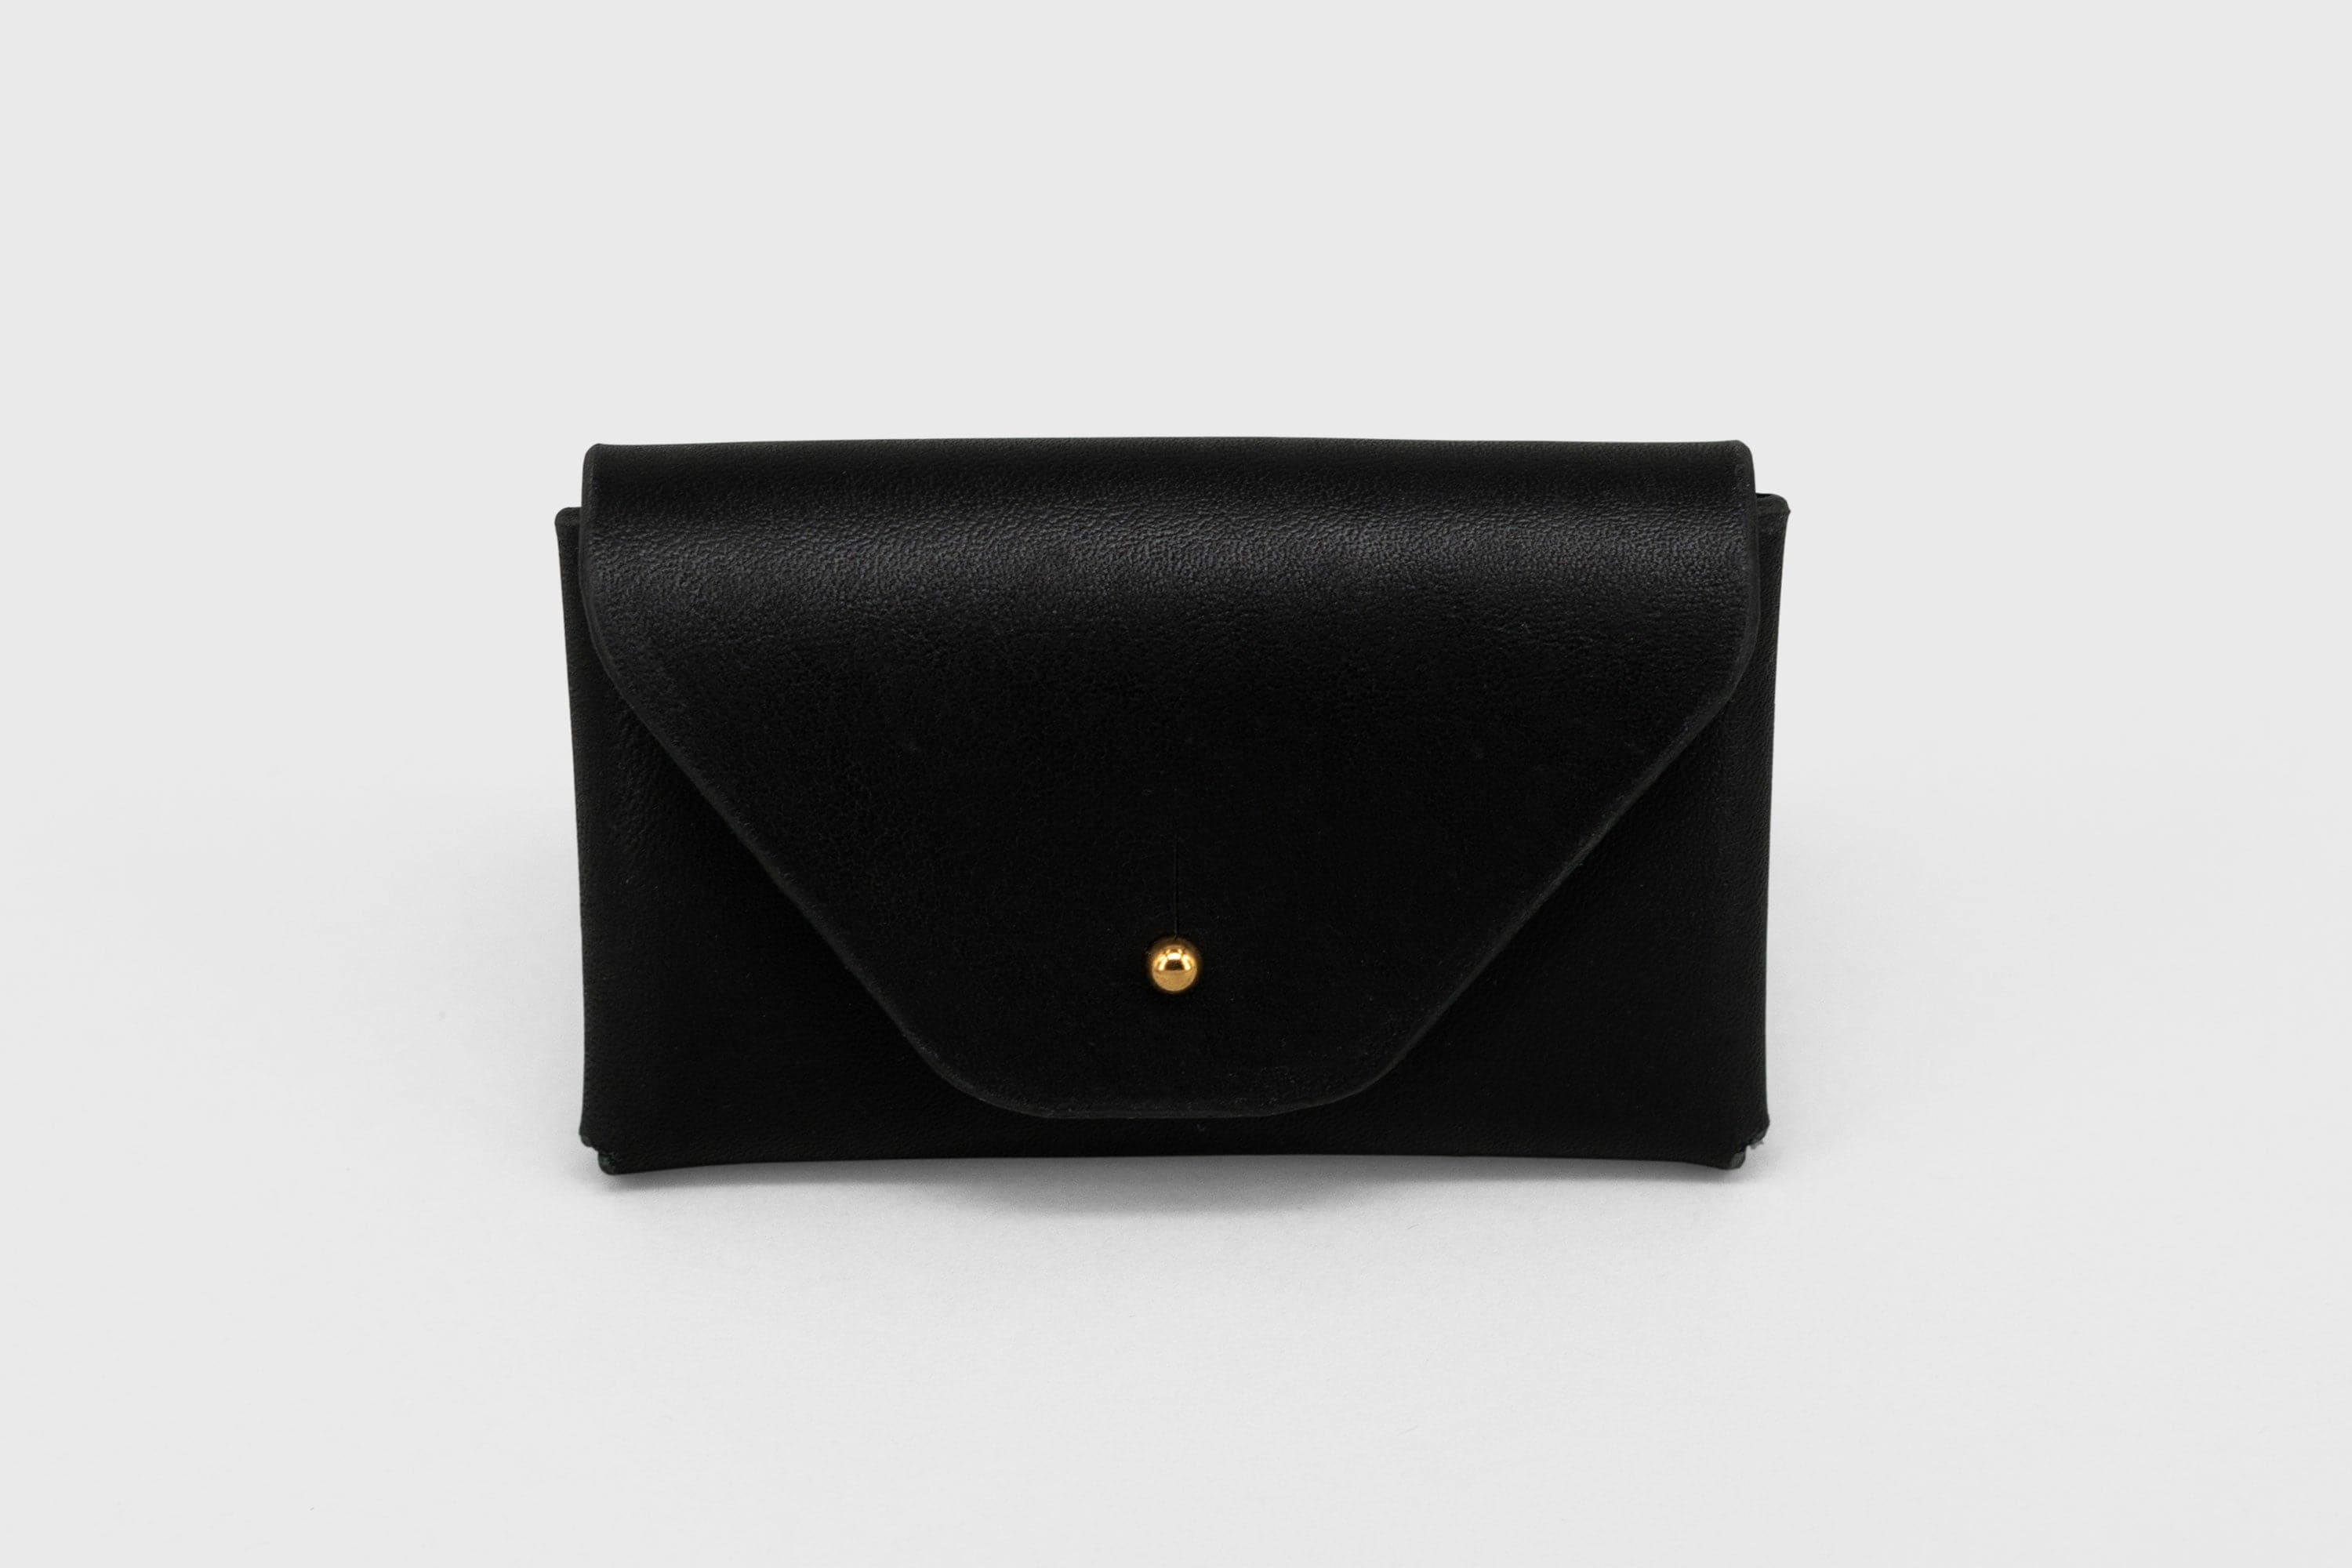 Wallet Minimalistic Black Leather Vachetta Design By Manuel Dreesmann Atelier Madre Barcelona